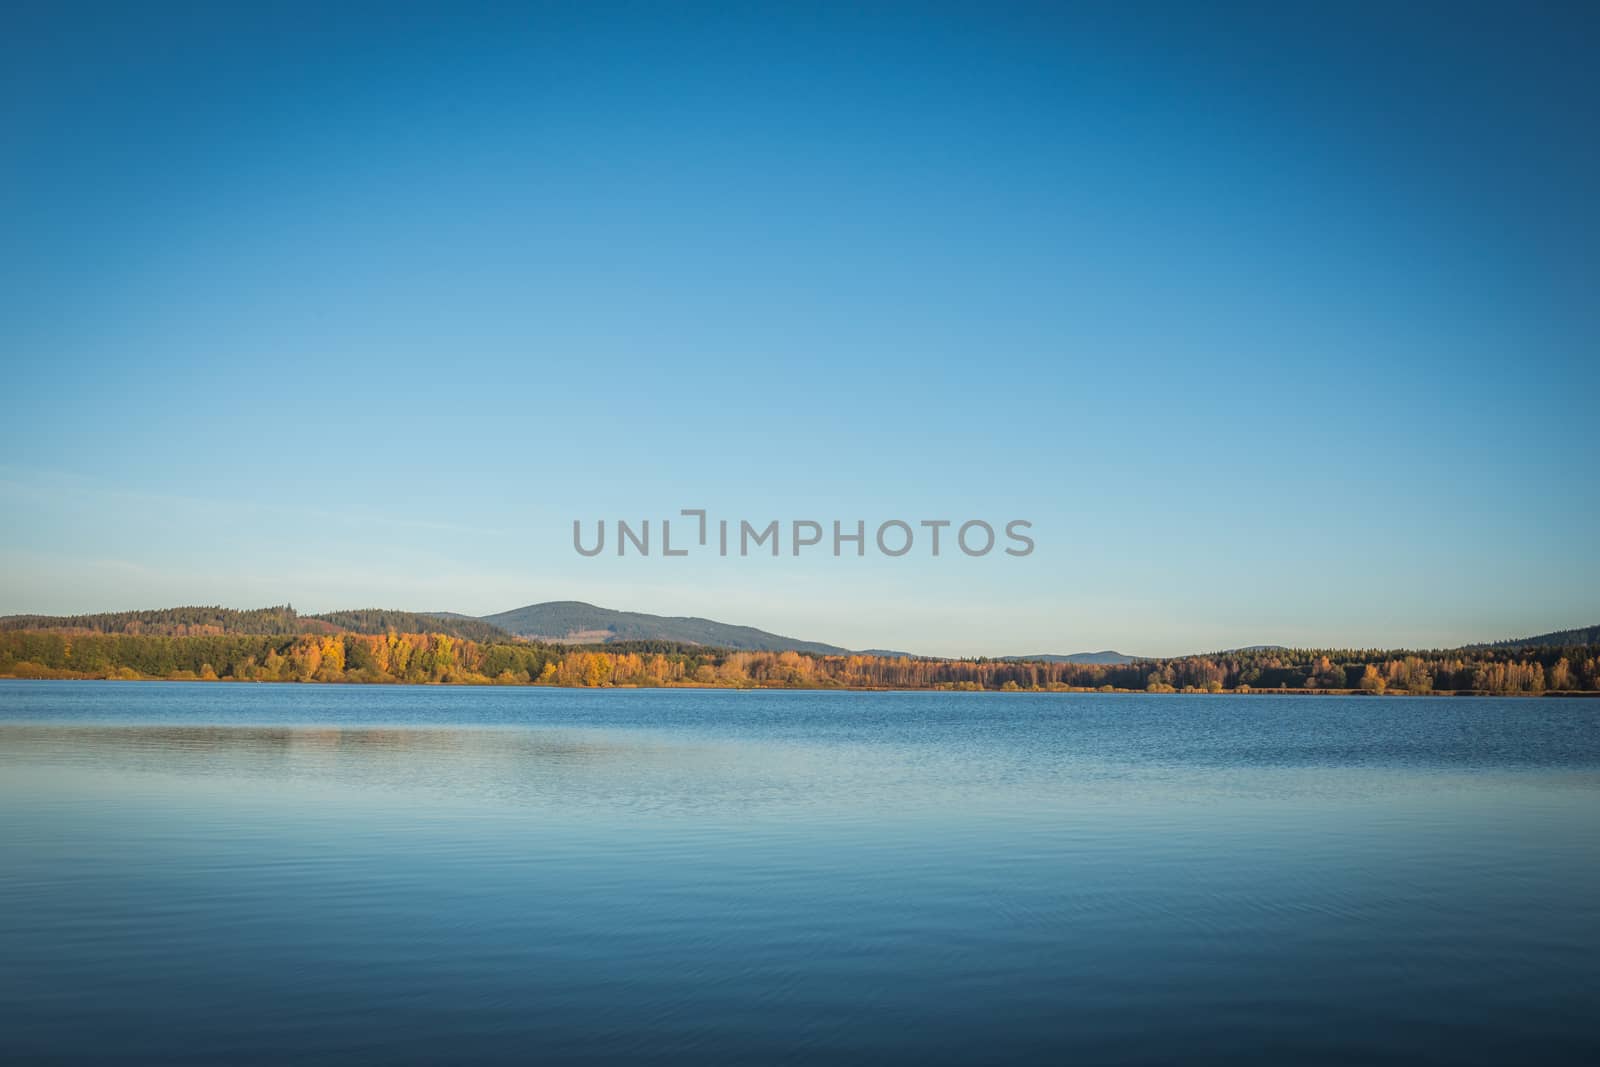 The Lipno Dam - Cerna v Posumavi, Czech Republic in a bright summer day. The lake is calm, has clean blue water. There are no clouds in the sky. by petrsvoboda91